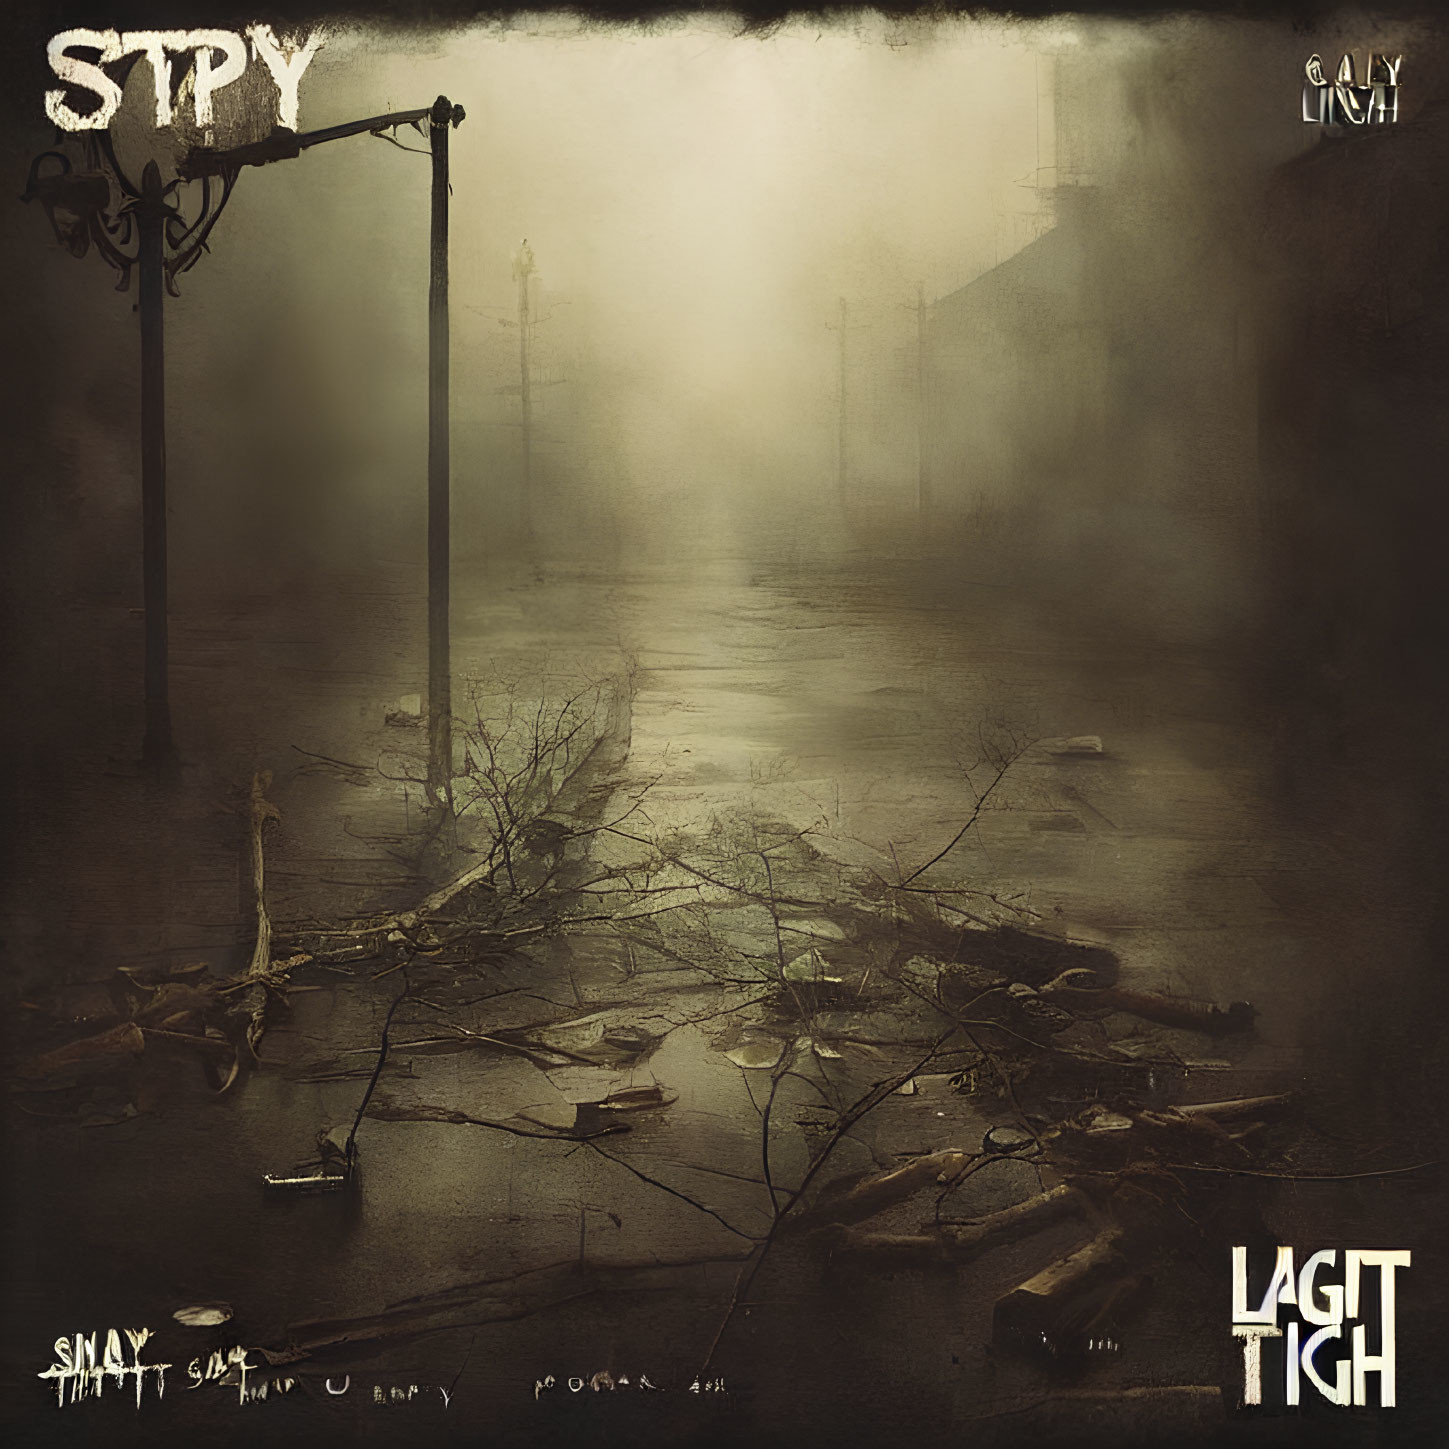 Foggy Street Scene with Street Lamp and Debris